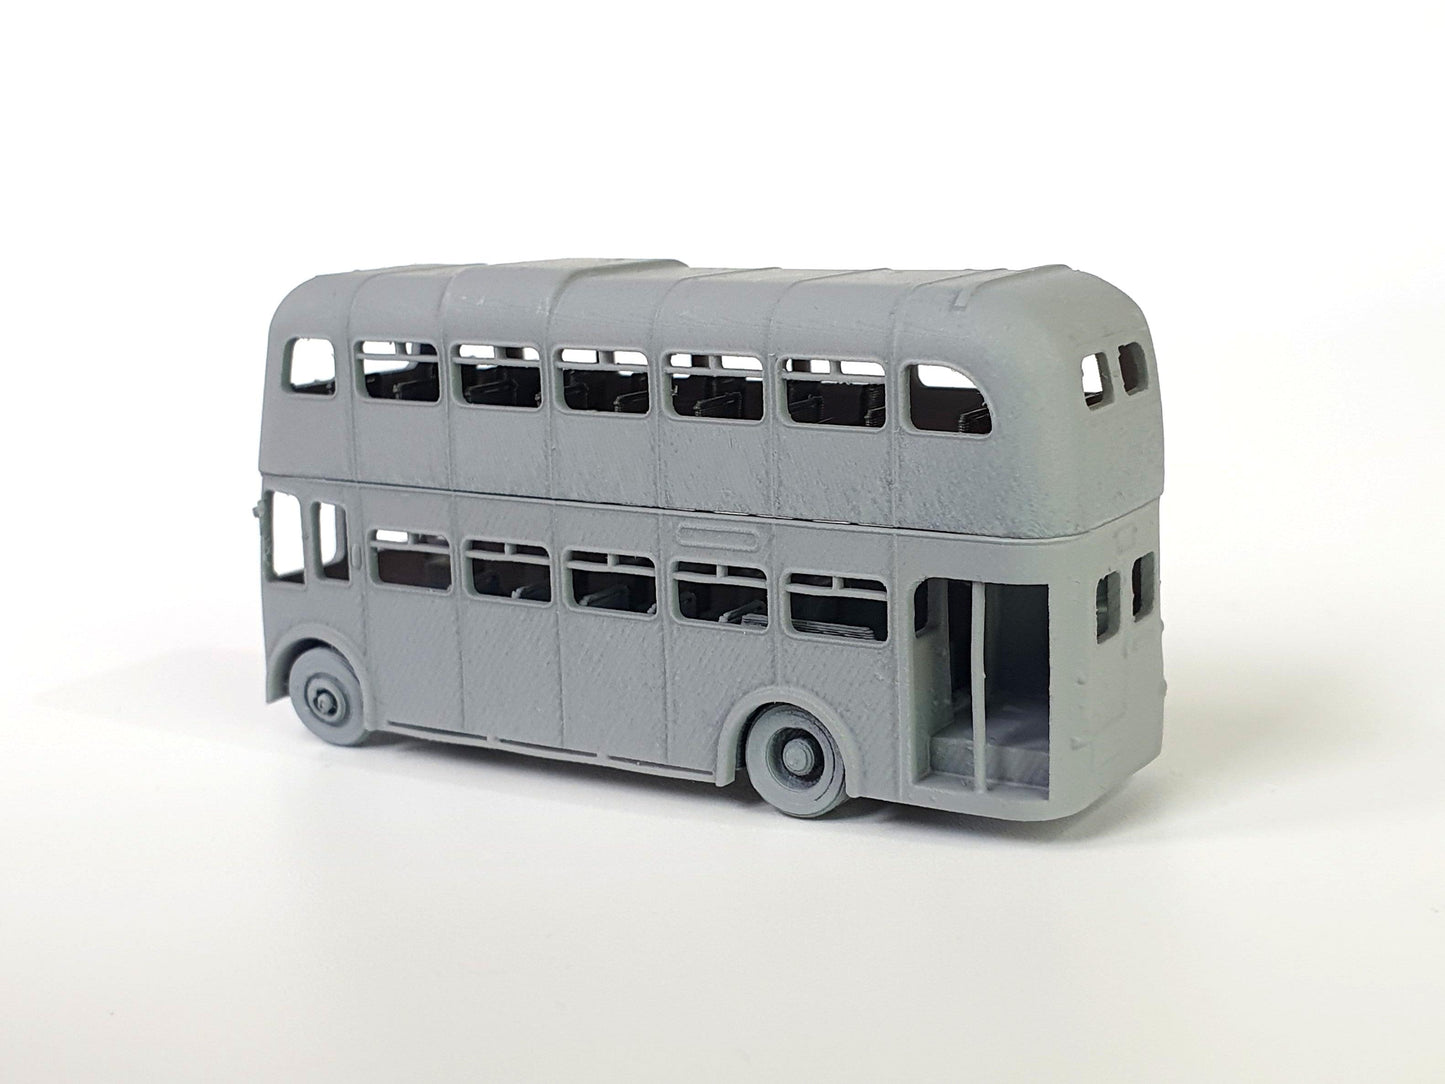 Bradford Trolleybus scale model